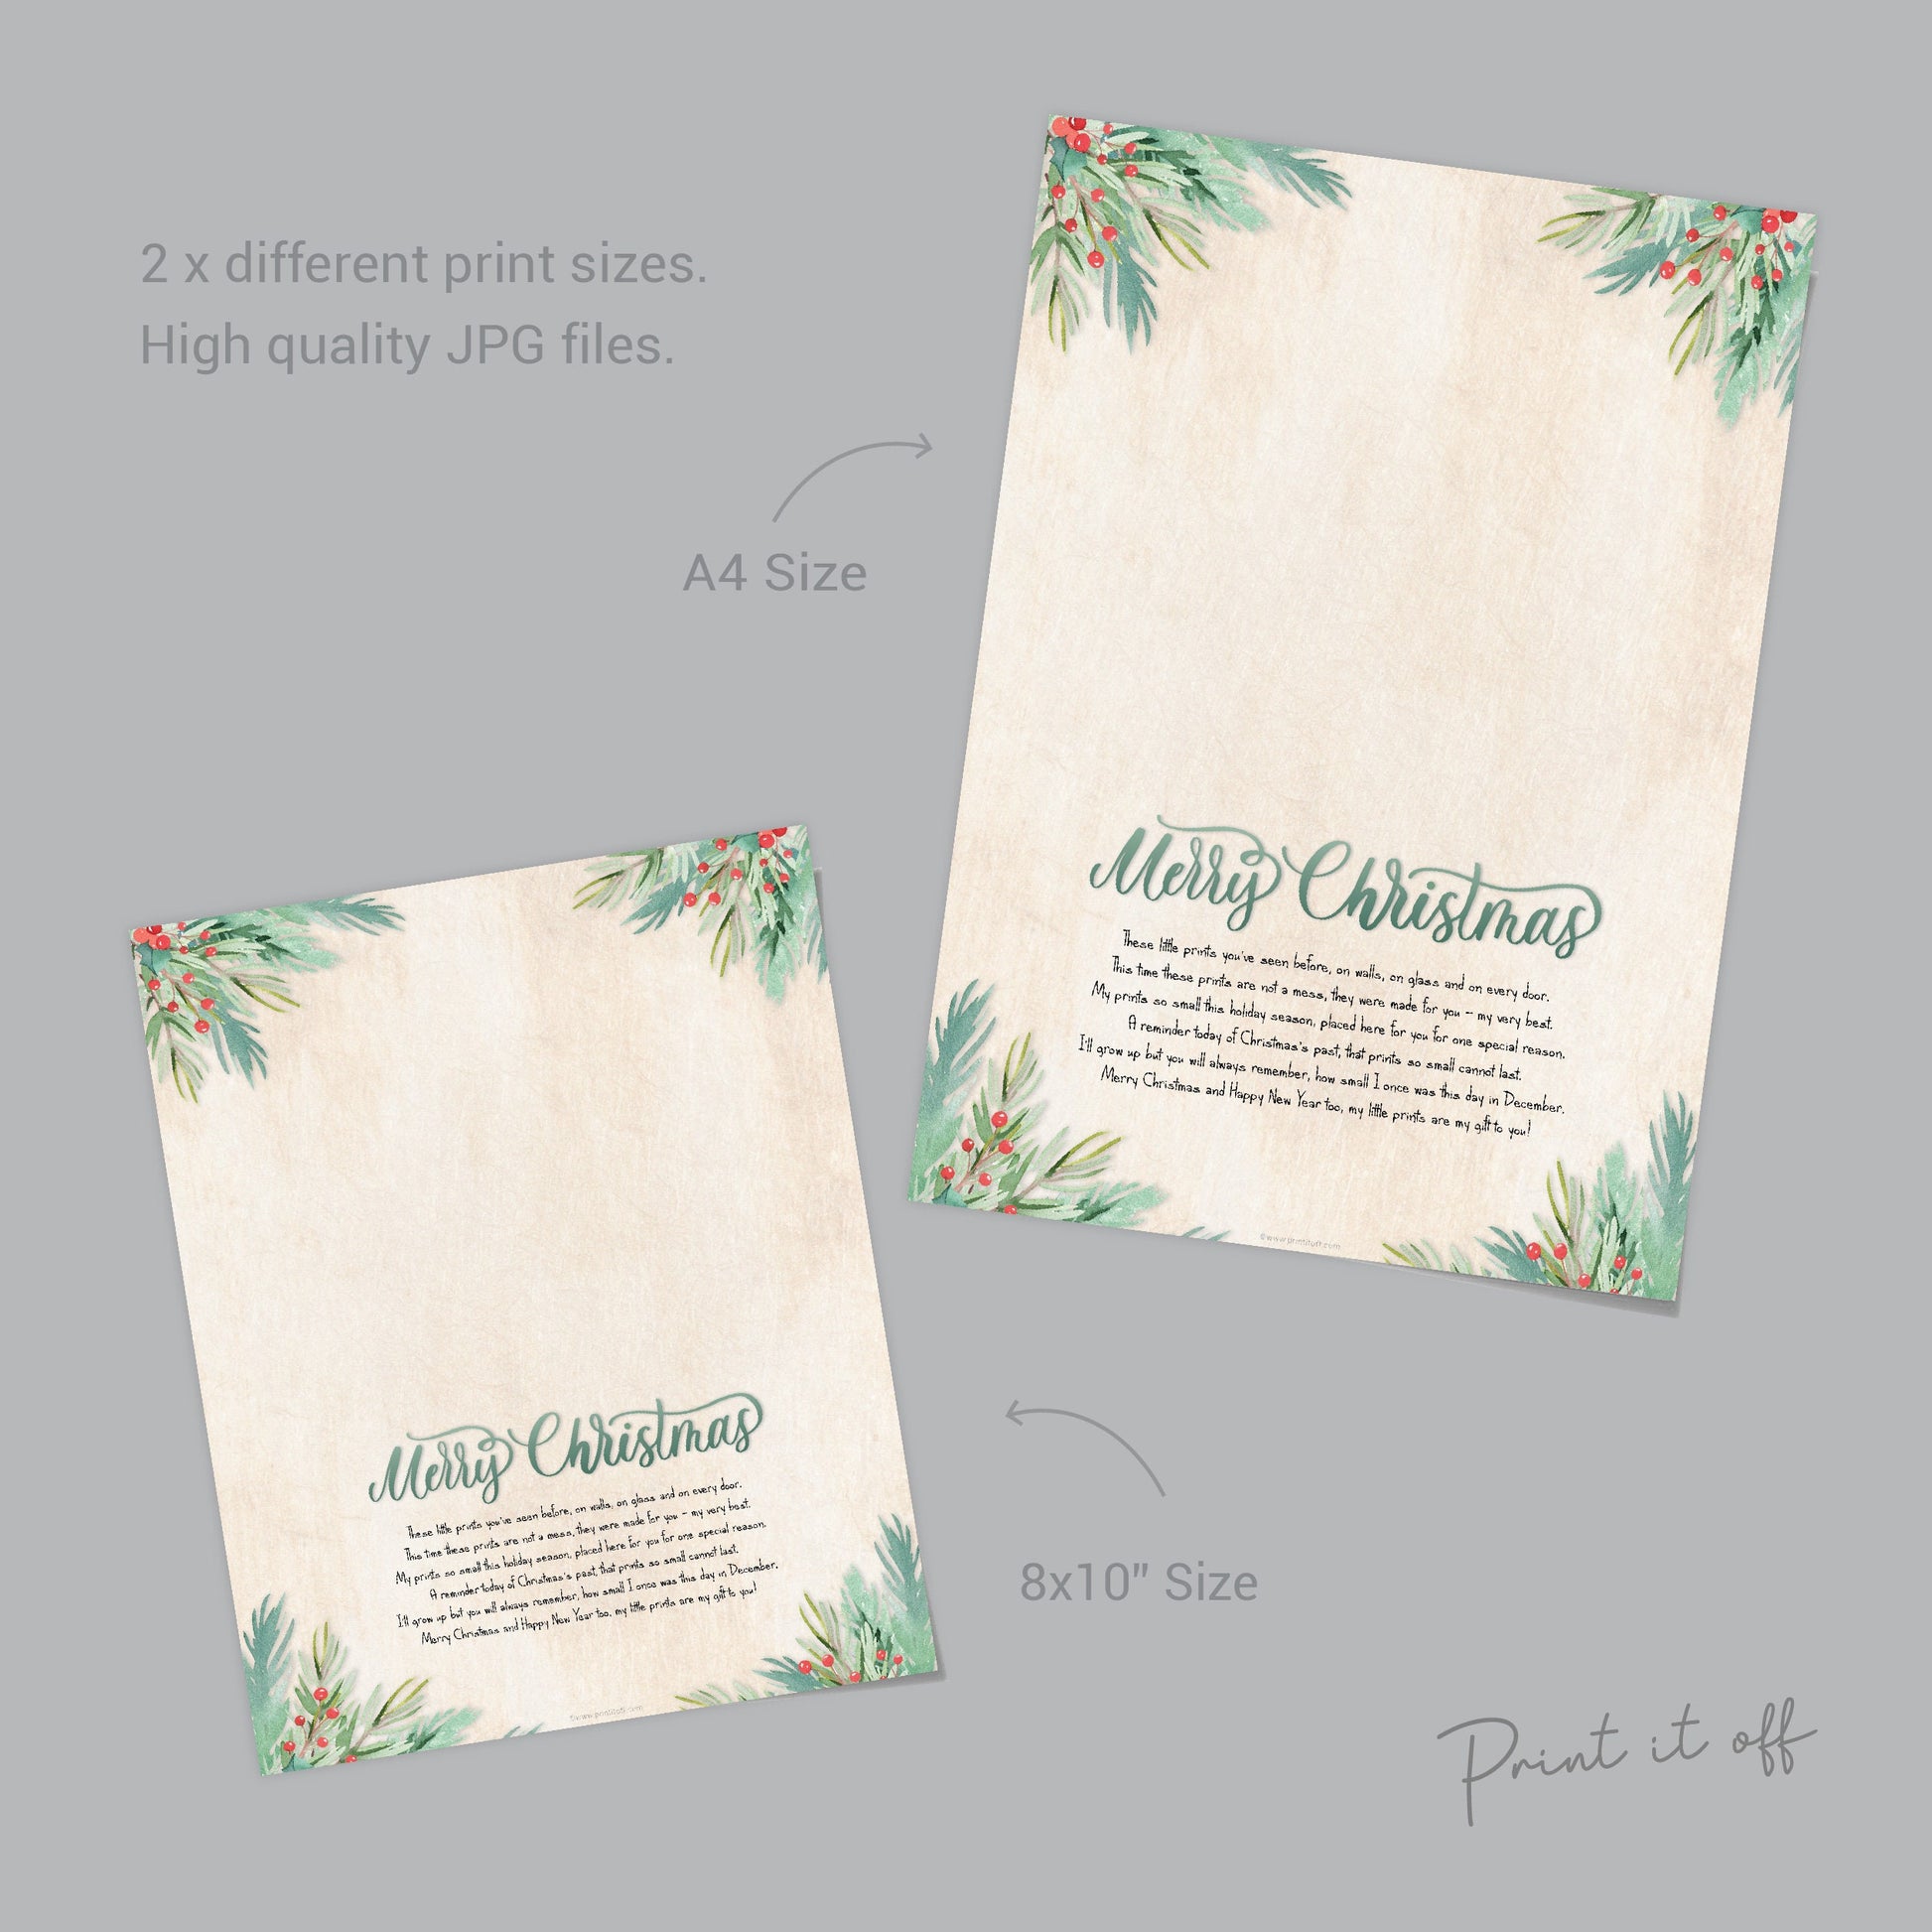 Christmas Handprint Poem / Merry First Xmas Art Craft / Baby Kids Toddler Hands / Keepsake Memory Homemade Gift DIY Card / Print it off 0361